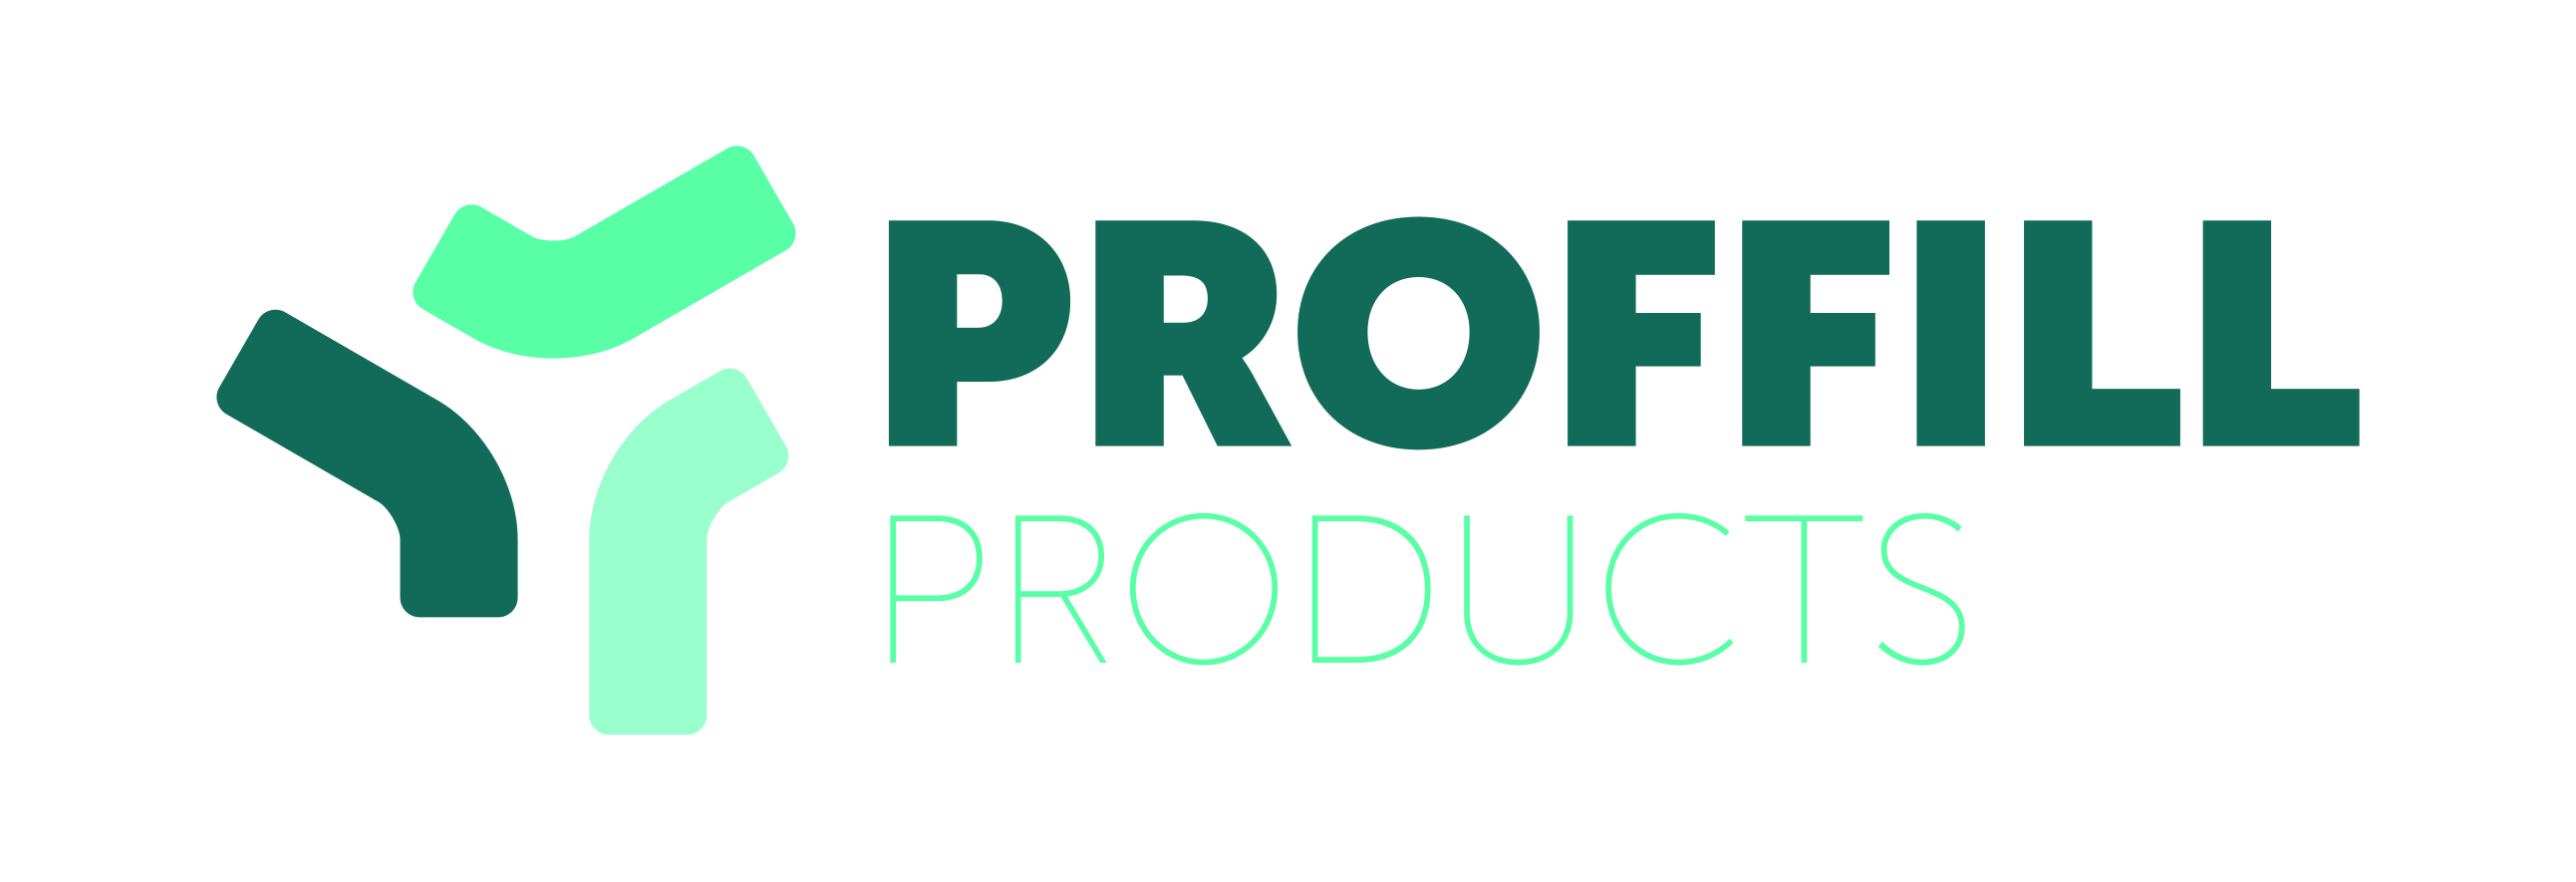 Foto: logo proffill2020